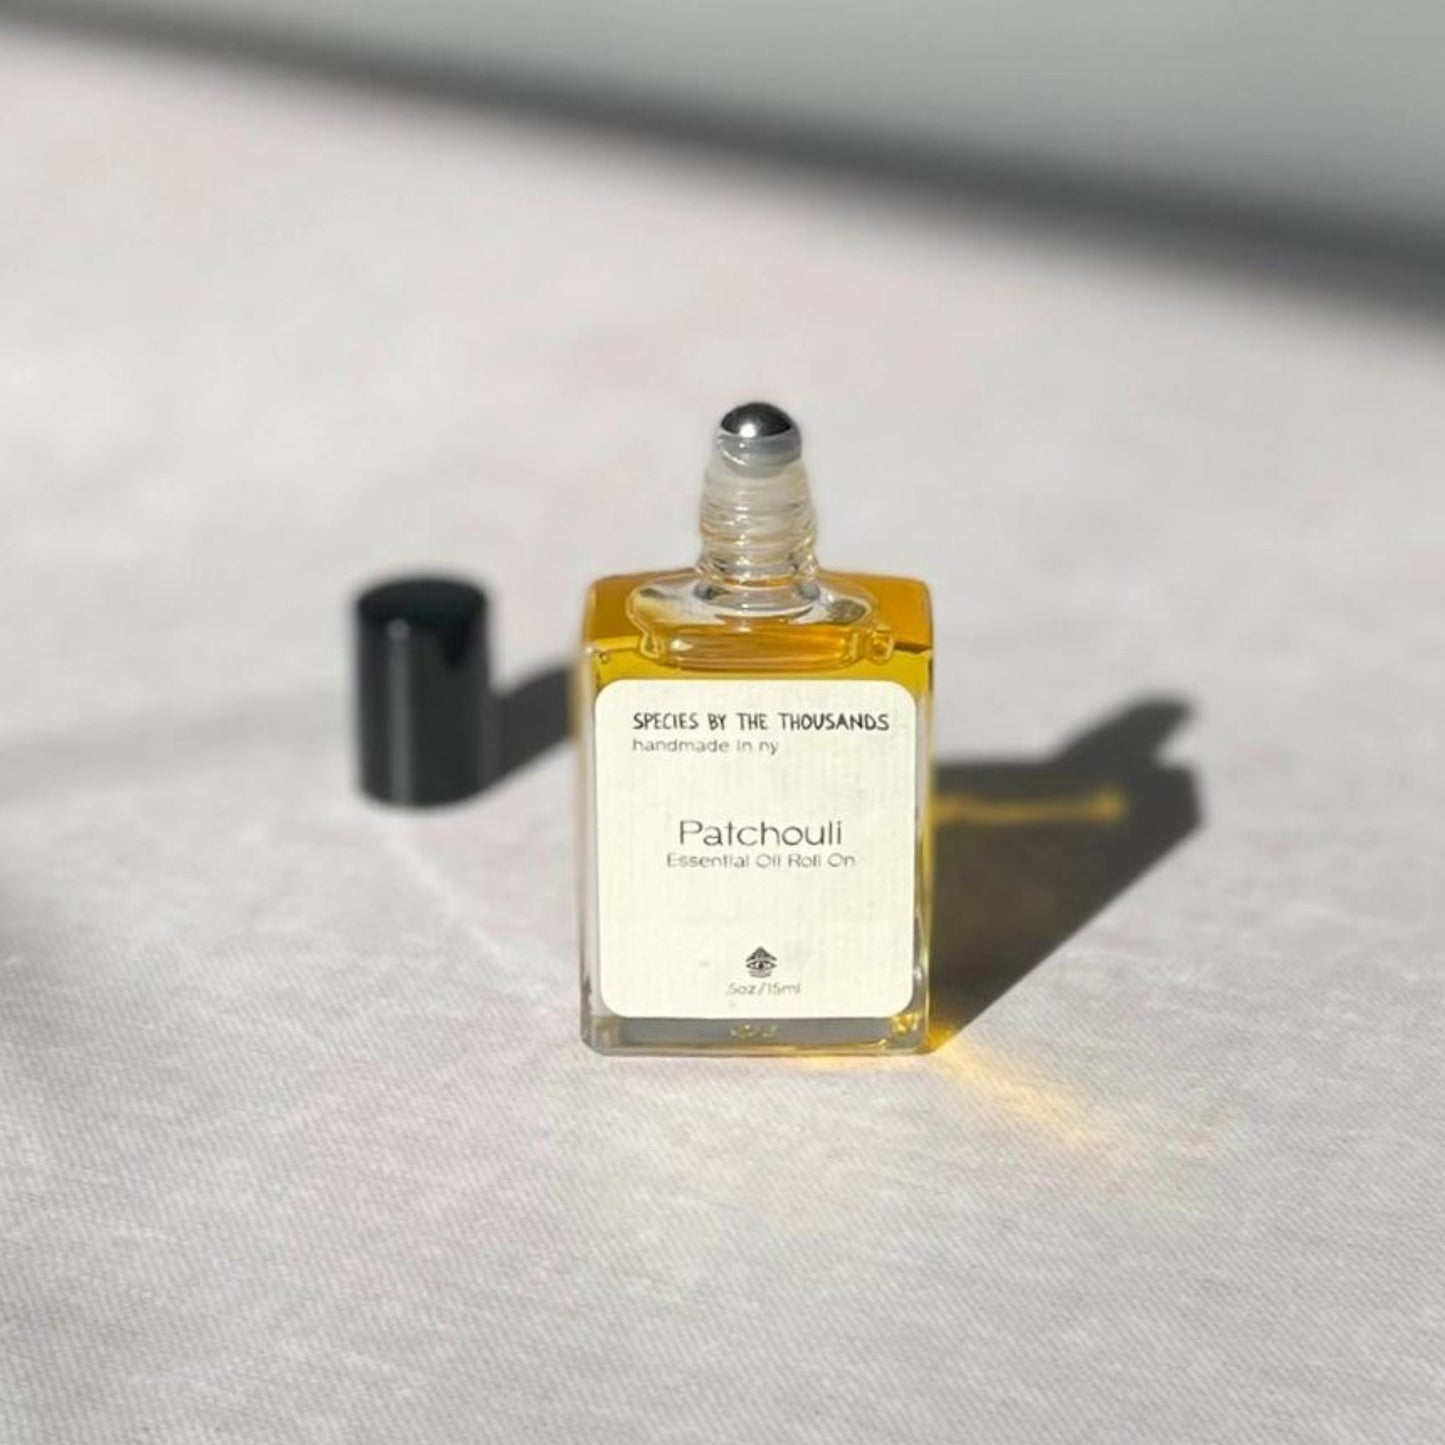 Essential Oil Roll-on Perfume